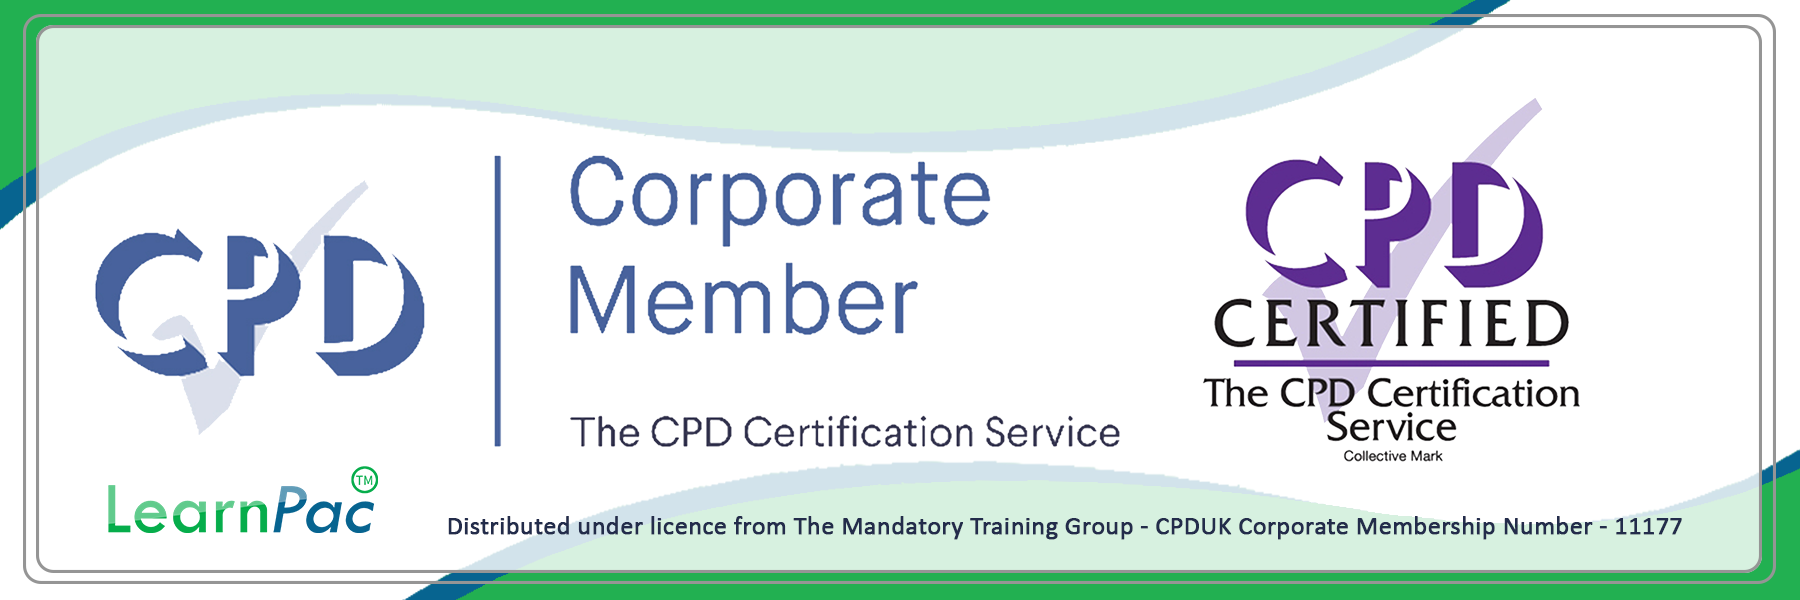 Care Certificate - - 15 Standards - CPDUK Certified - Learnpac System UK - 